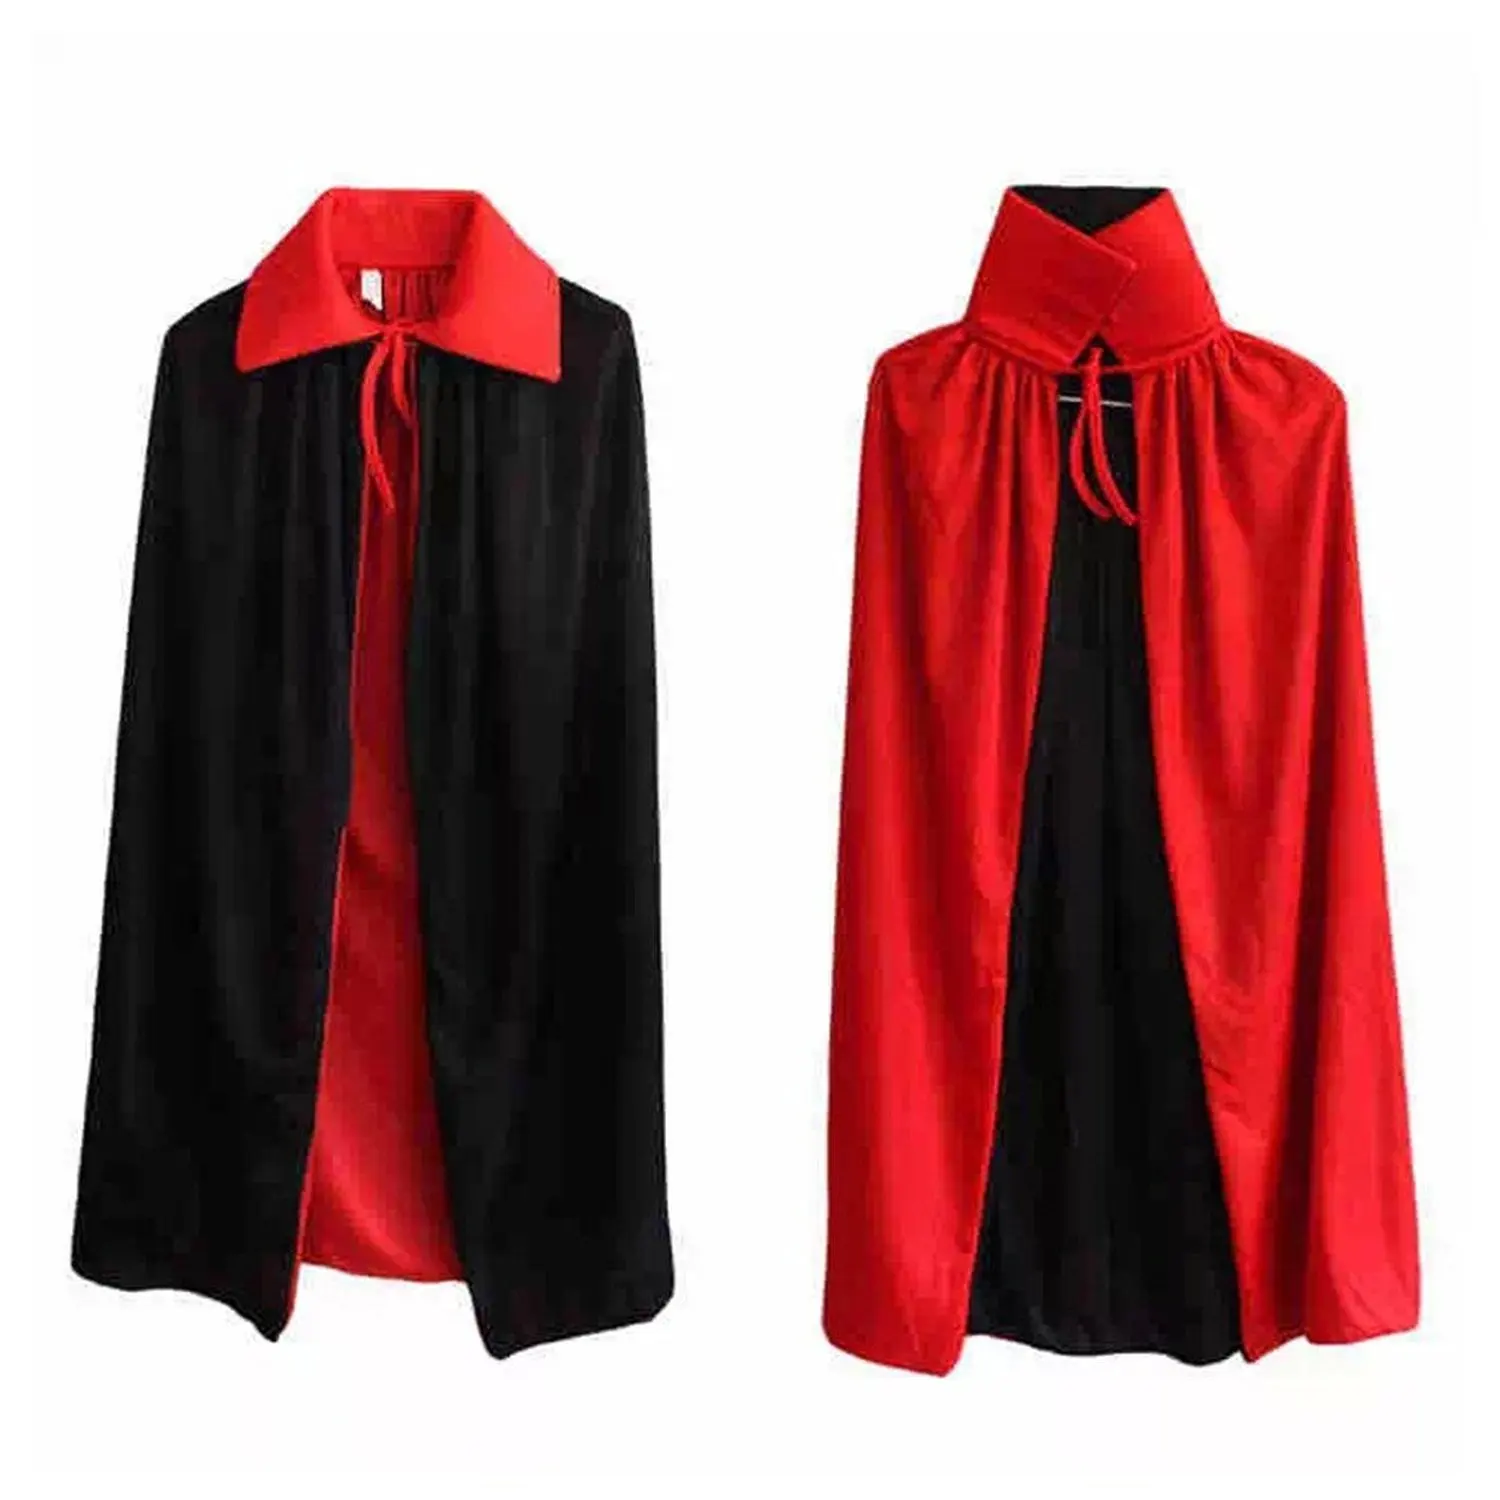 54/" Vampire Cape with Collar Halloween Fancy Dress Long Adult Black